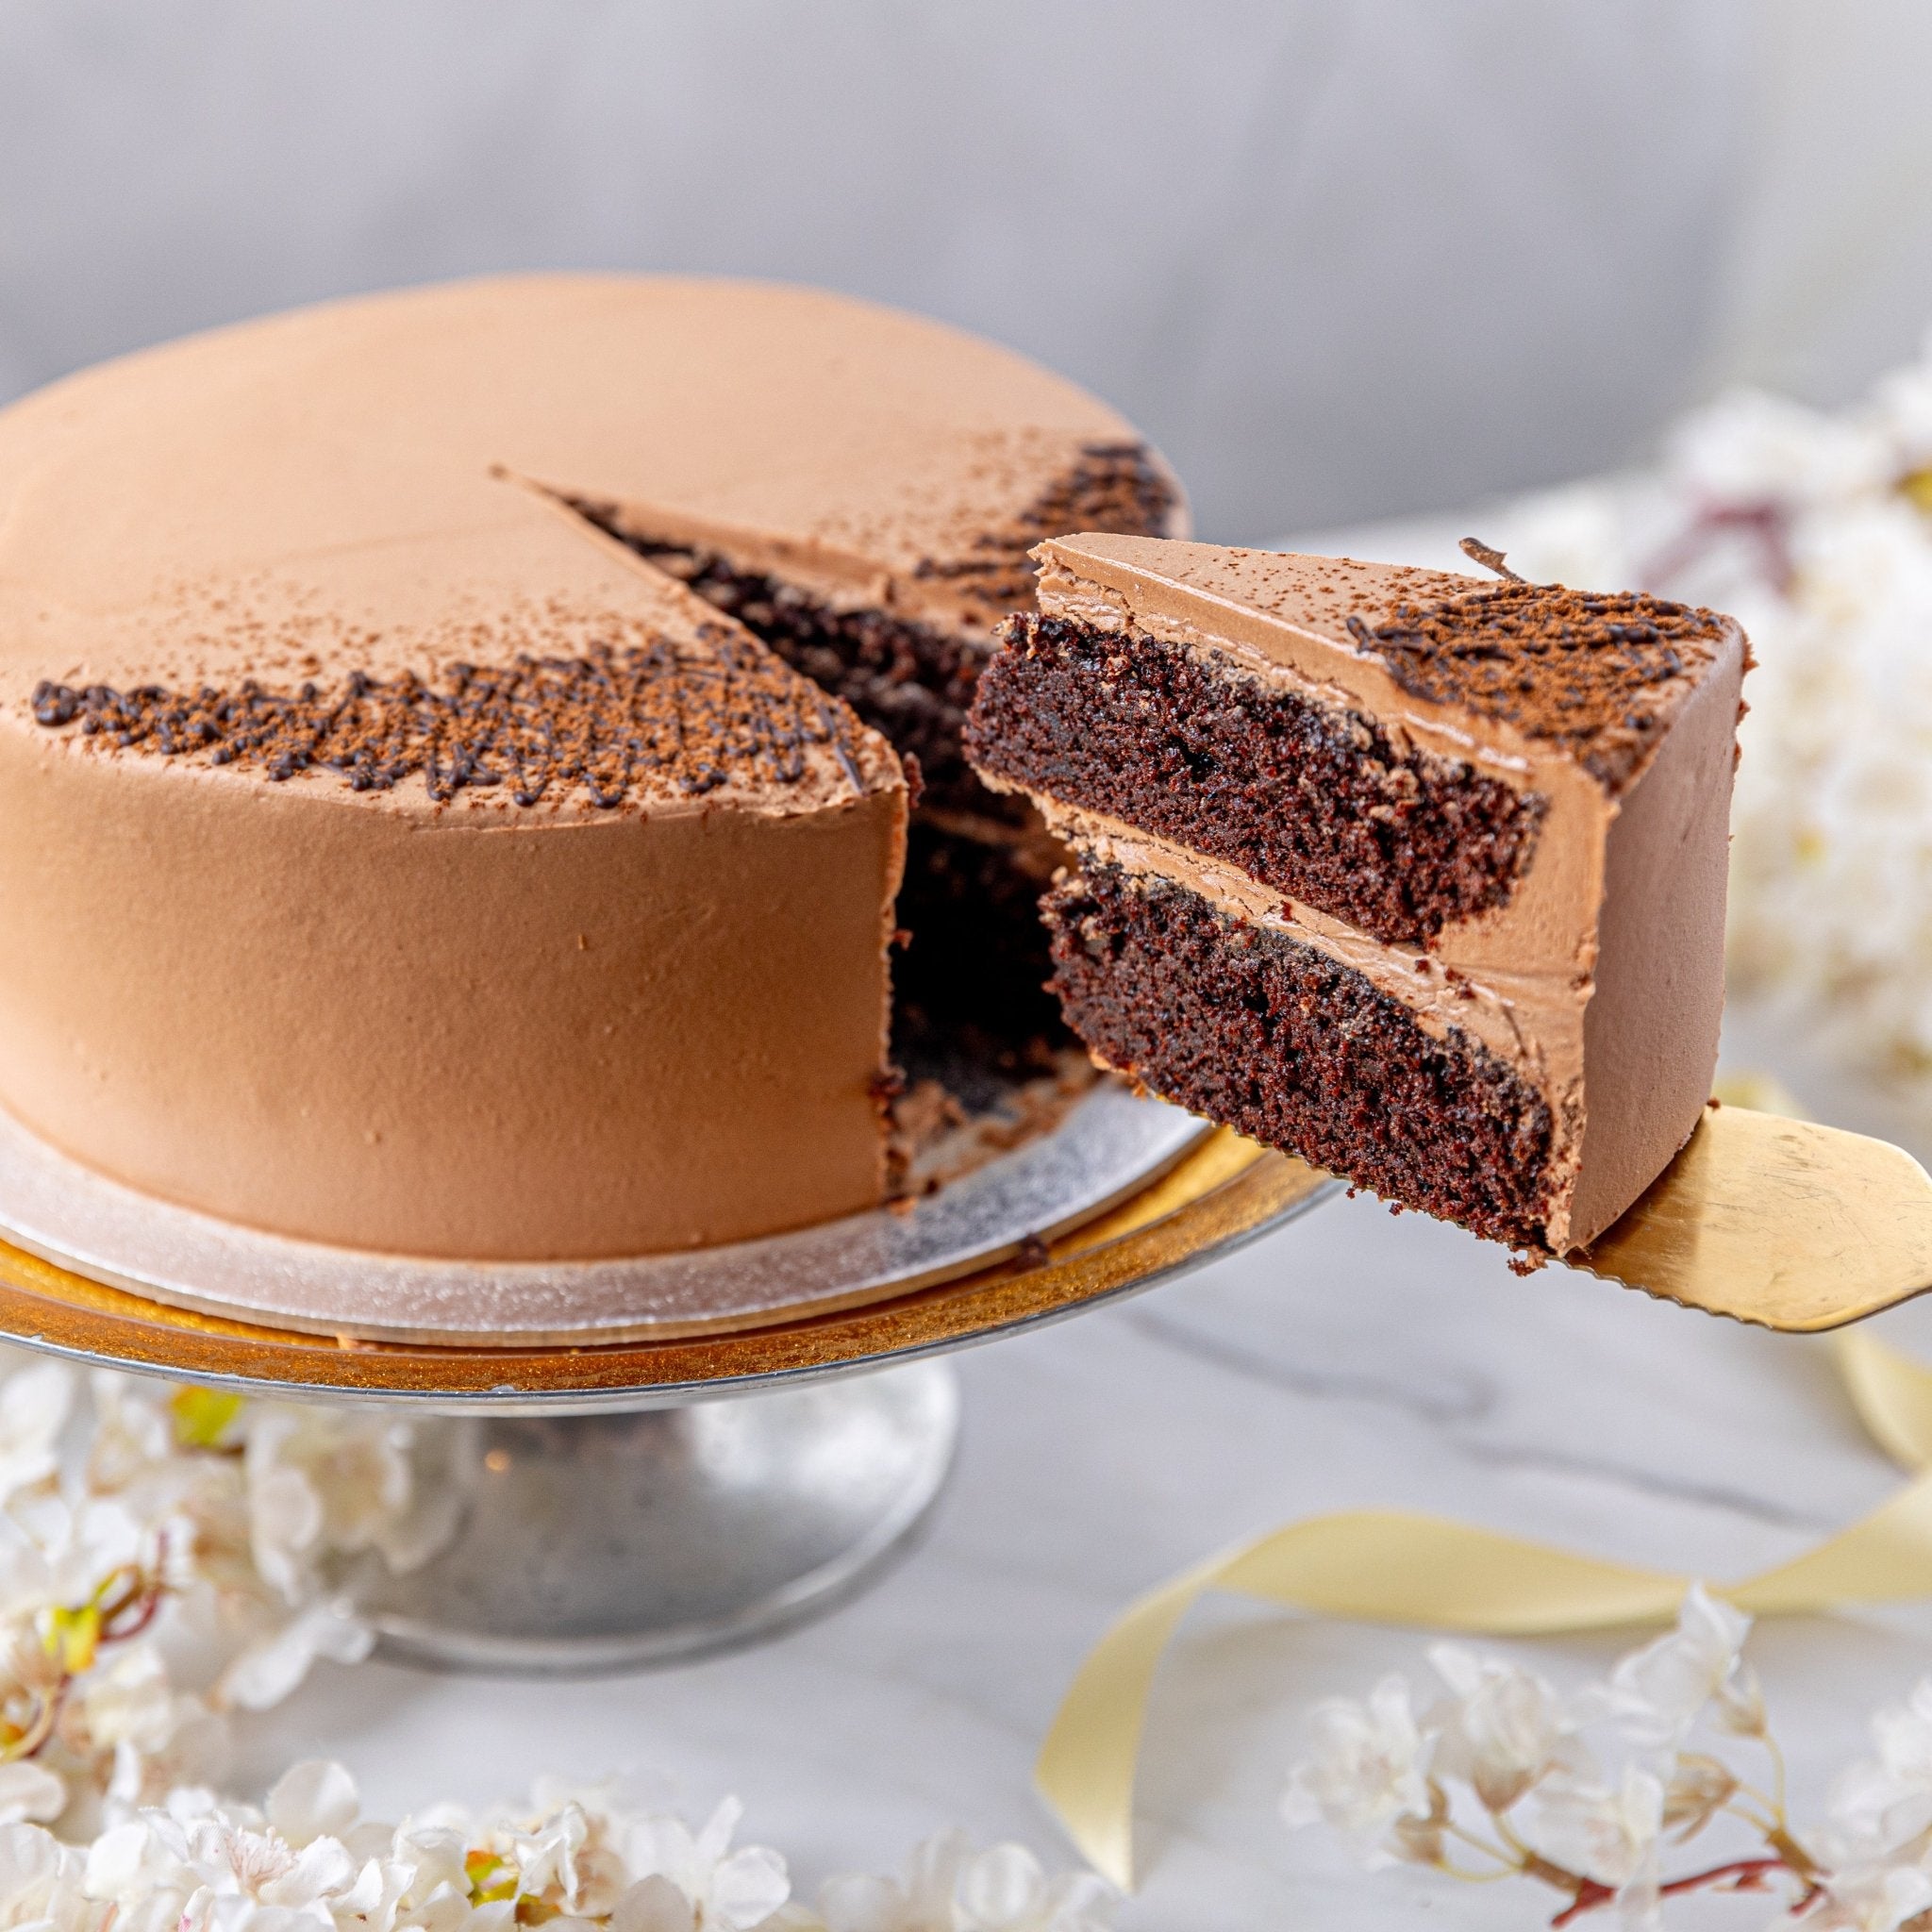 Double Chocolate Cake - Jack and Beyond